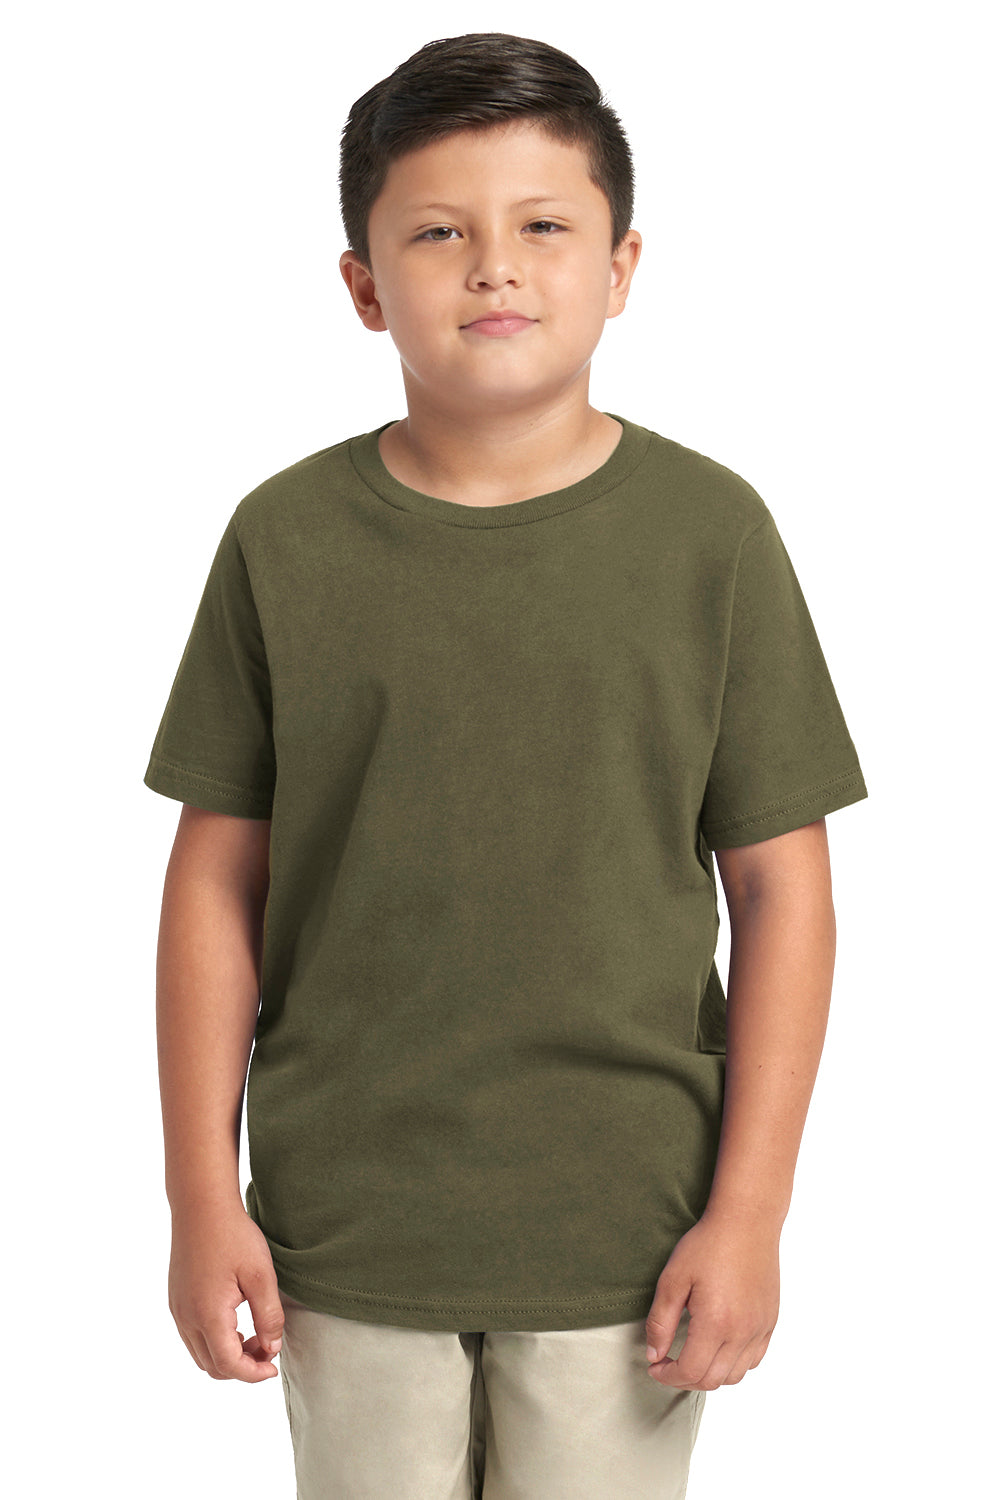 Next Level 3310 Fine Jersey Short Sleeve Crewneck T-Shirt Military Green Front